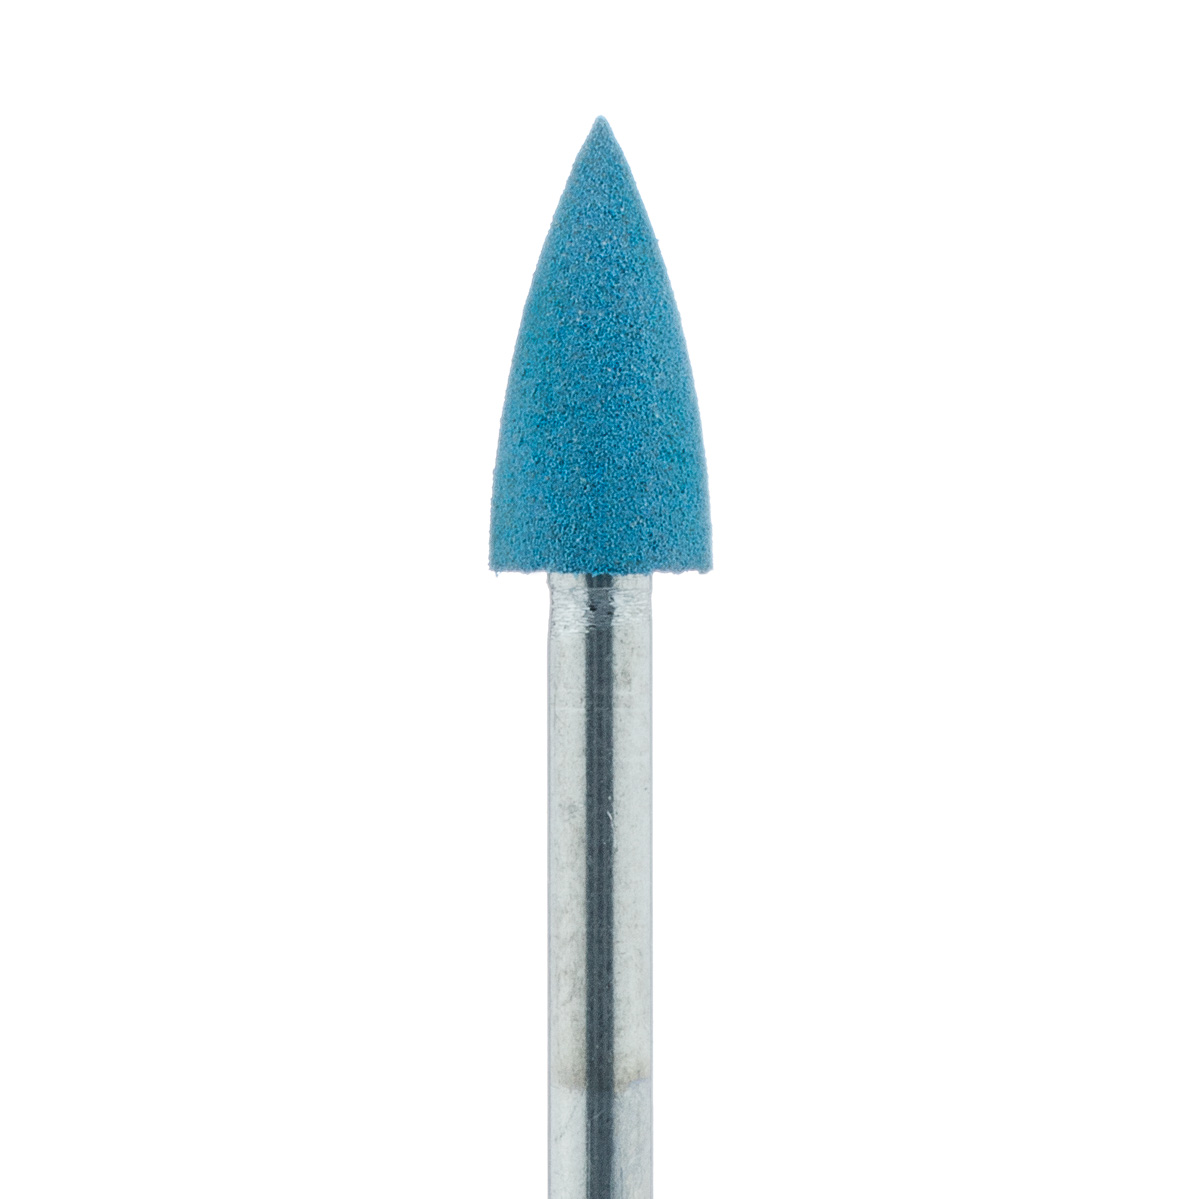 9741M-030-FG-BLU Polisher, Diamond Impregnated, For Porcelain, Blue, Point, 3mm Ø, Polishing (Medium), FG